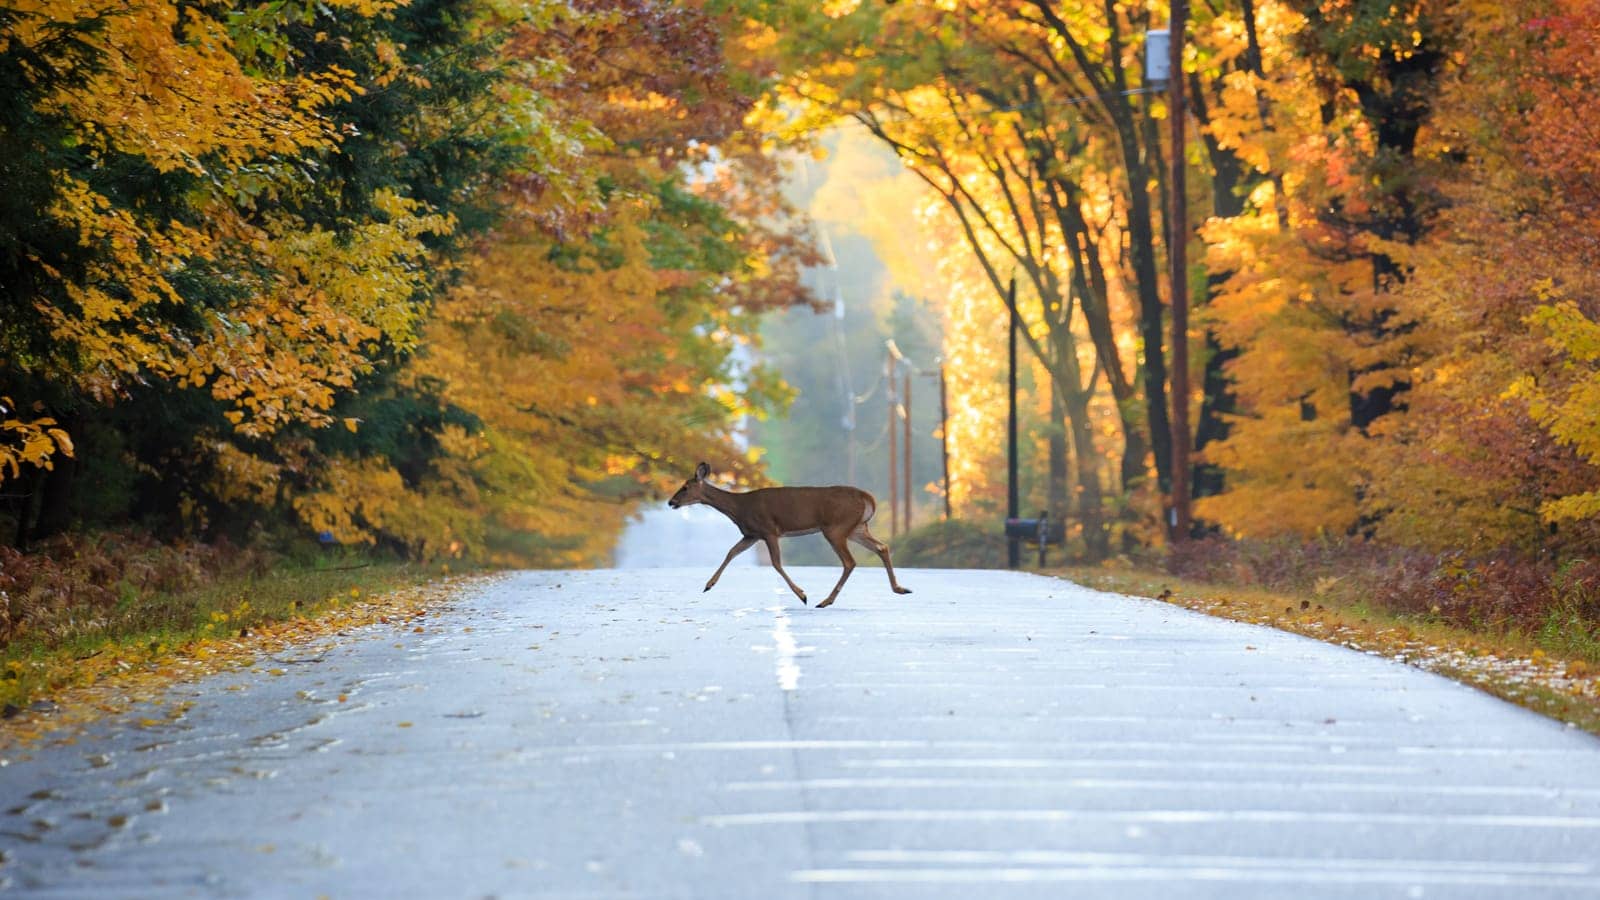 Deer running across a highway in the fall